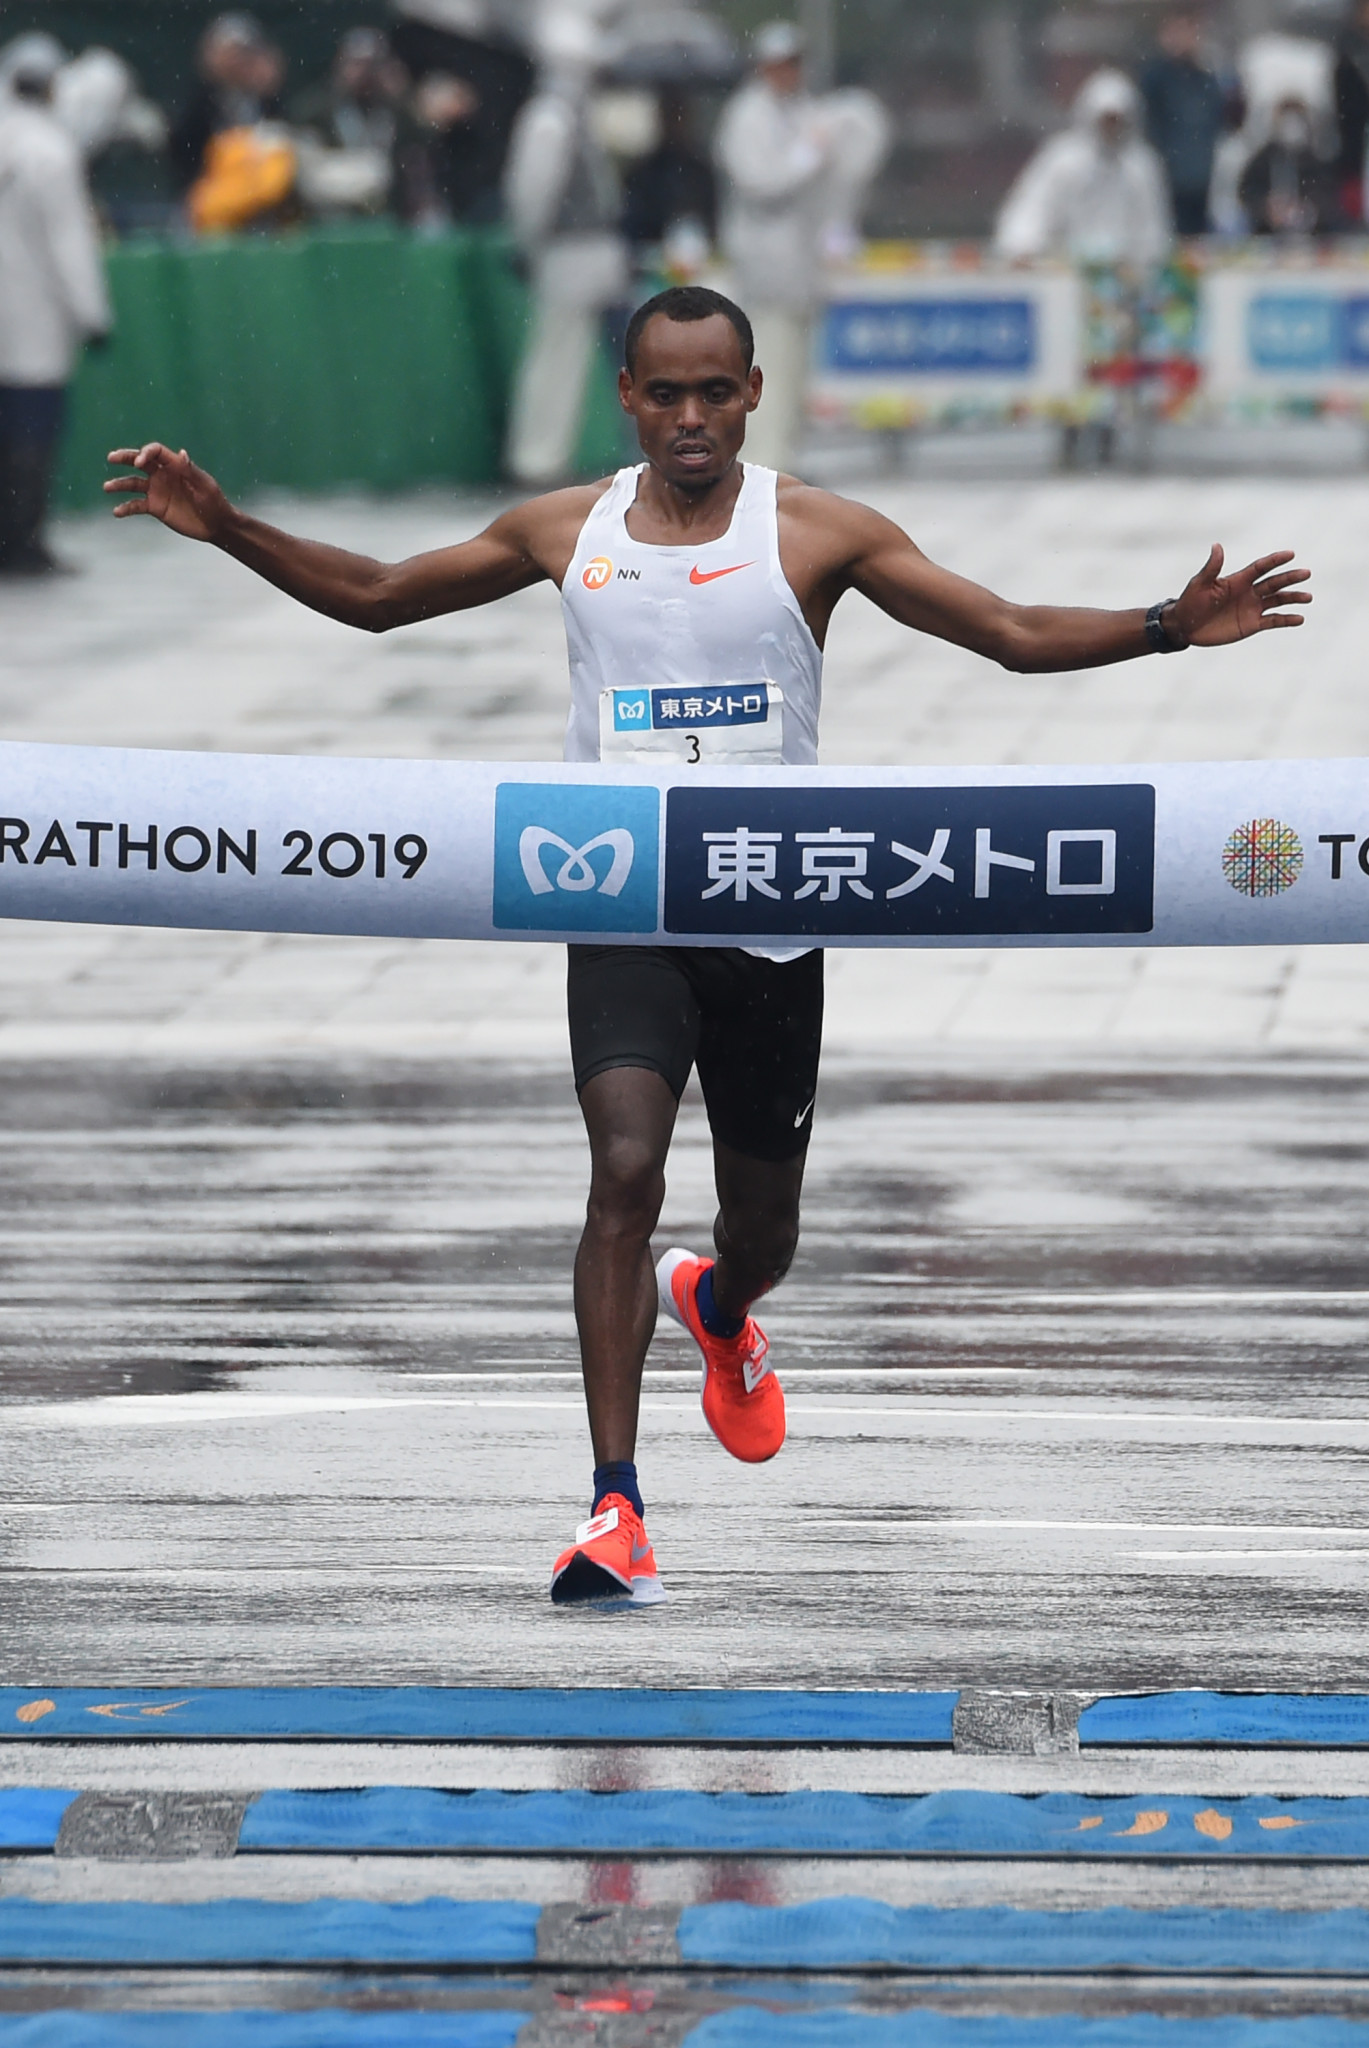 Birhanu Legese of Ethiopia won the men's race in Tokyo ©Getty Images